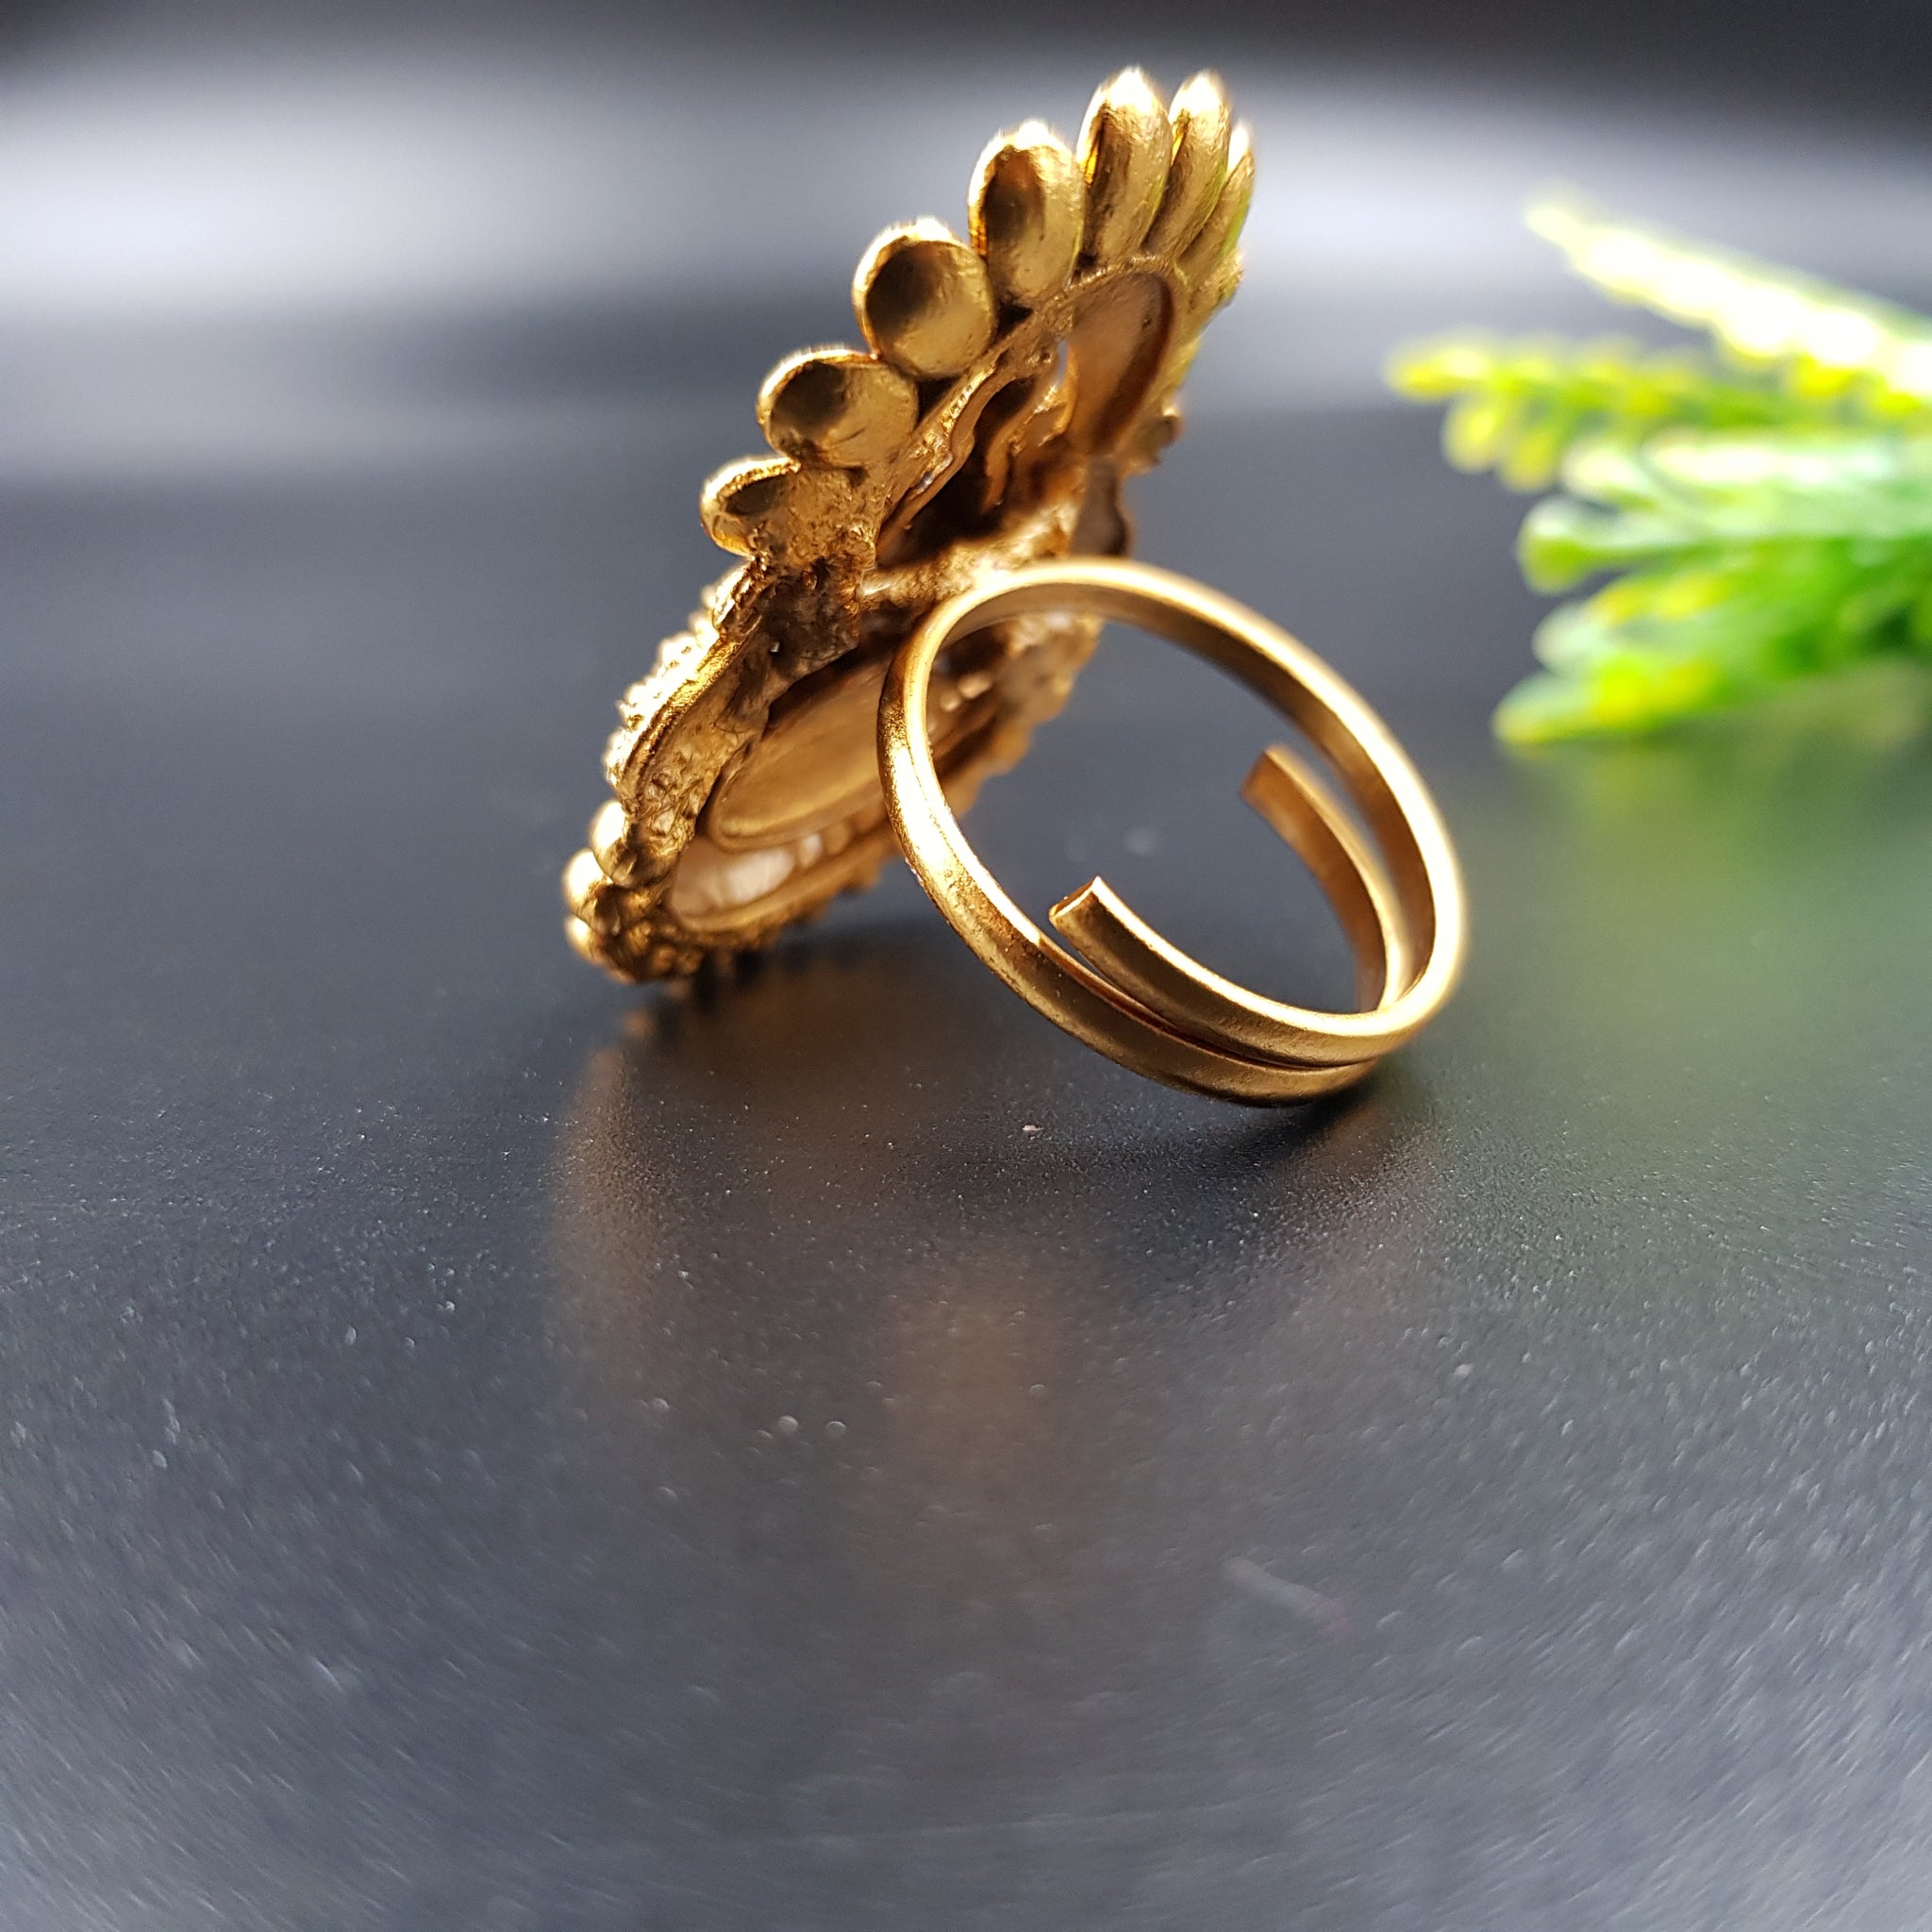 Antique Gold Finish Ring 10294-28